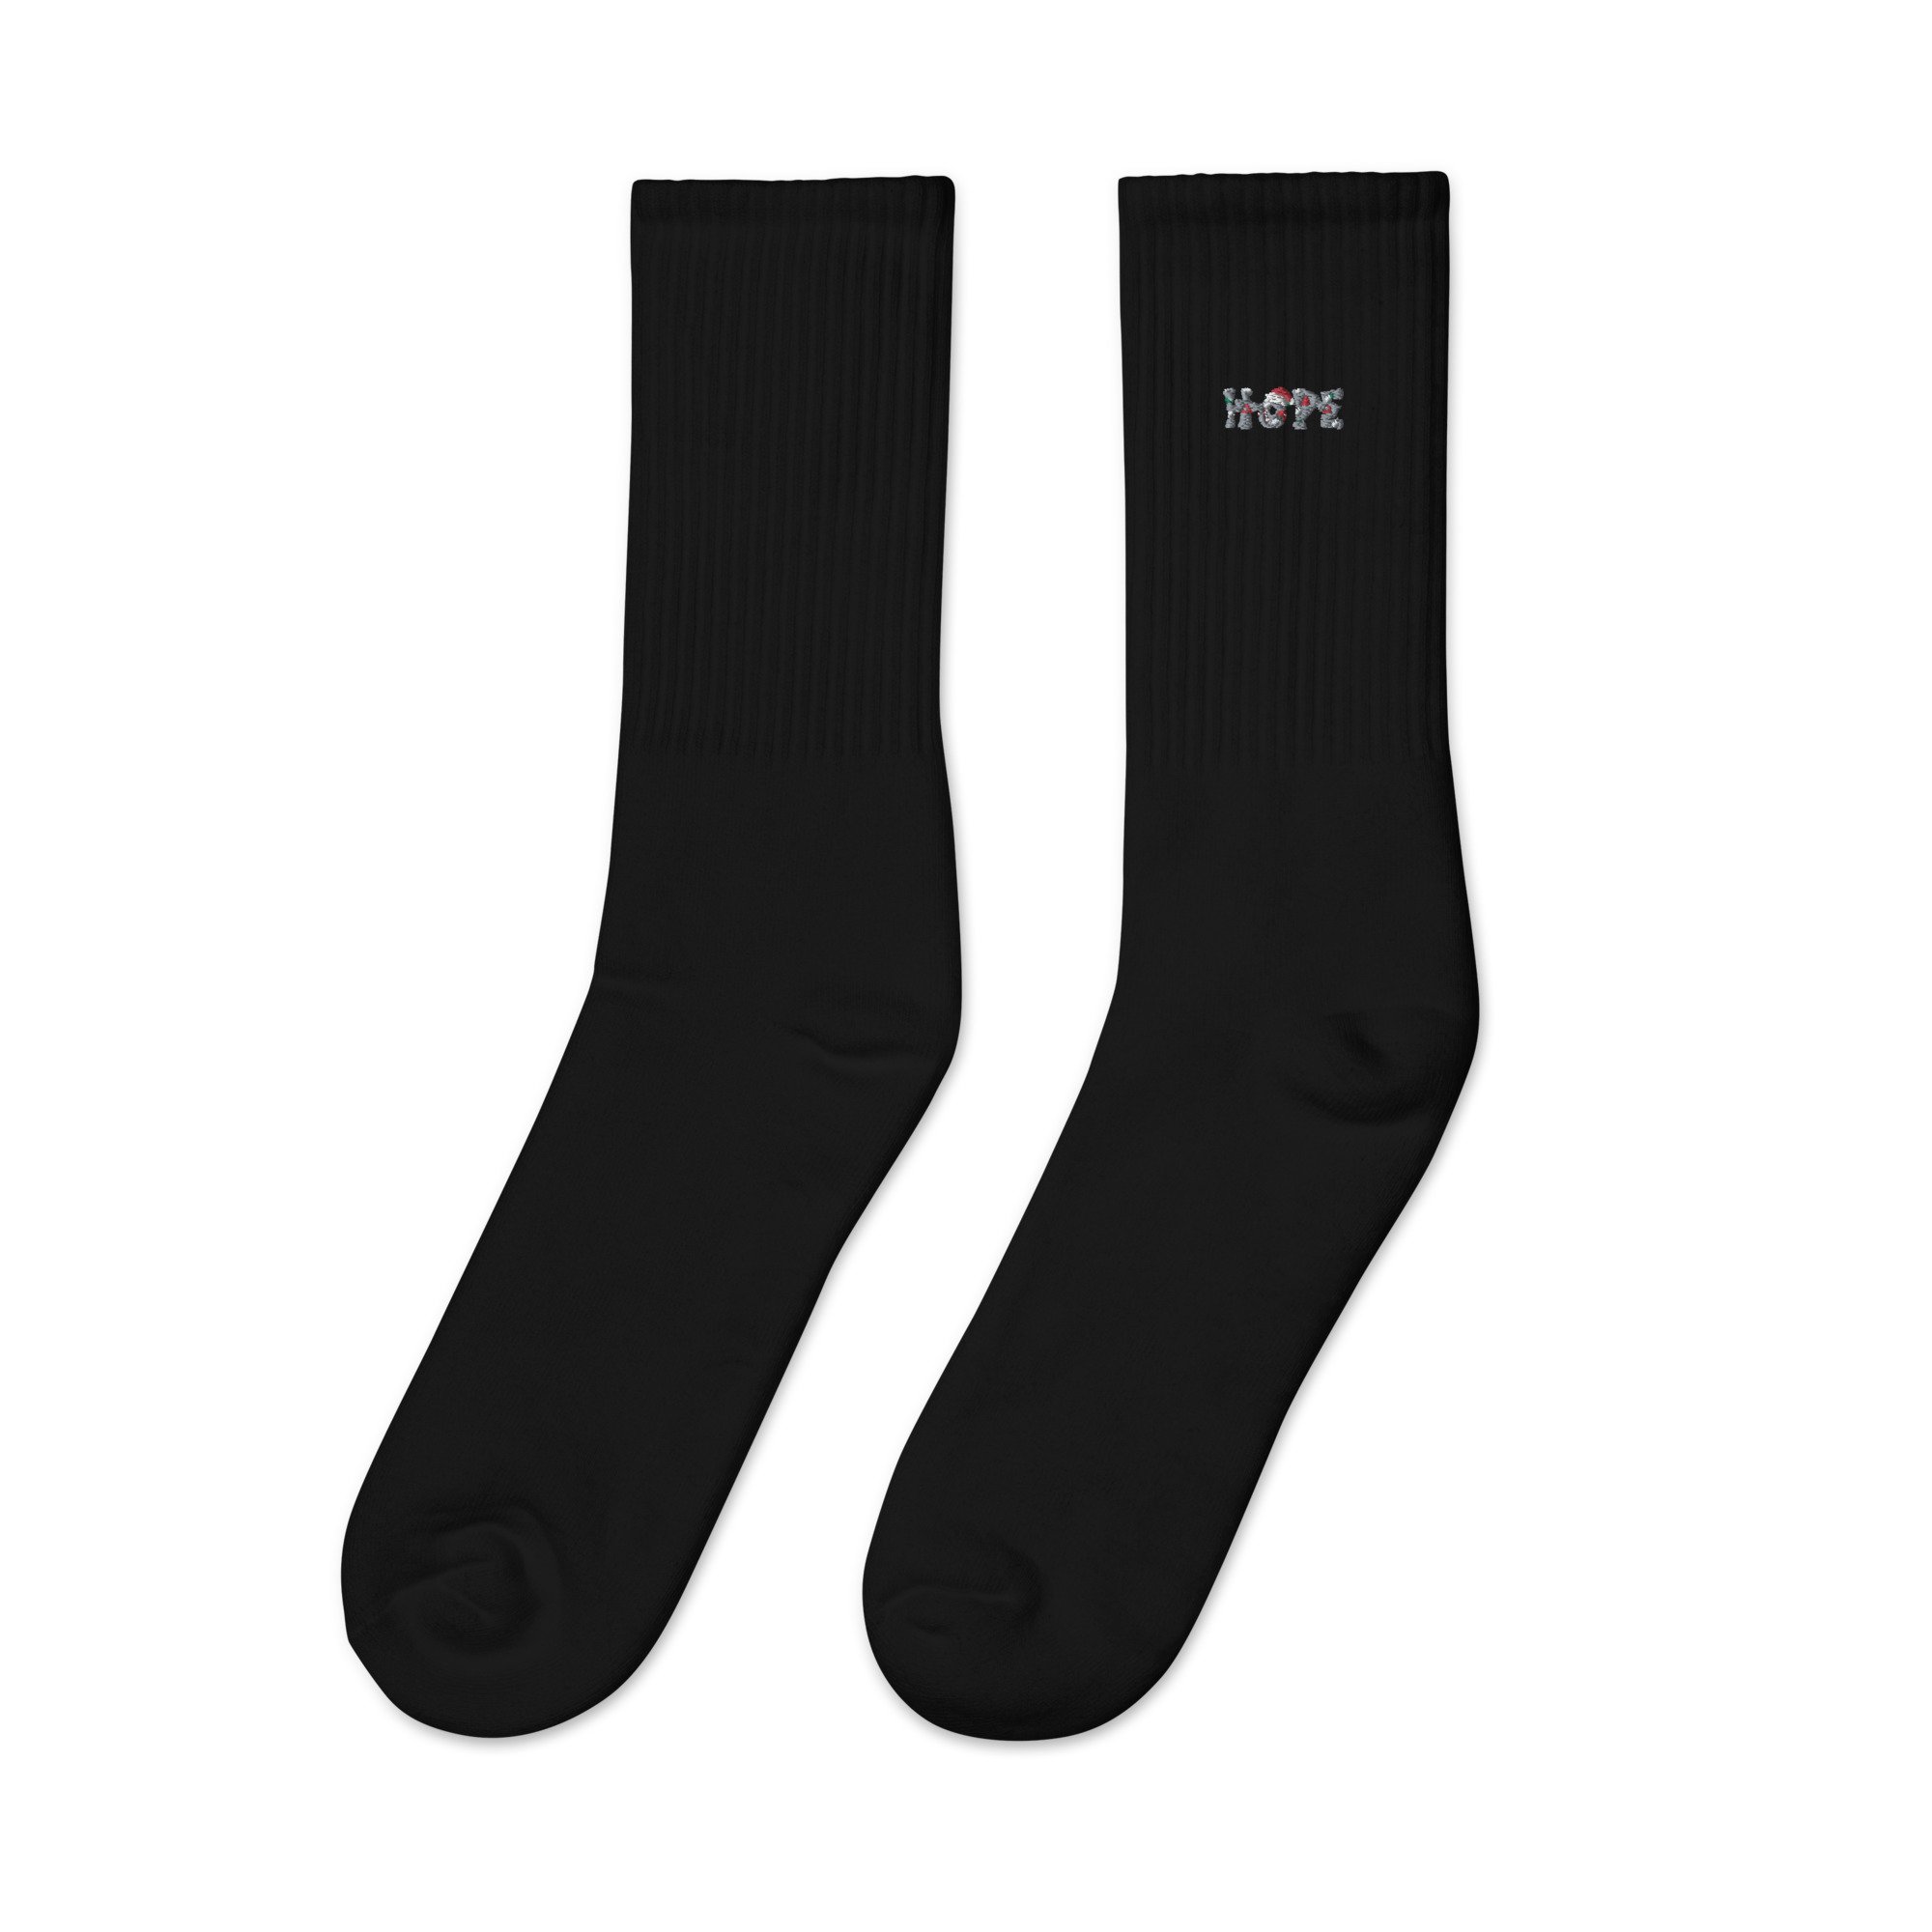 embroidered-crew-socks-black-left-6561f9ec23ff3.jpg